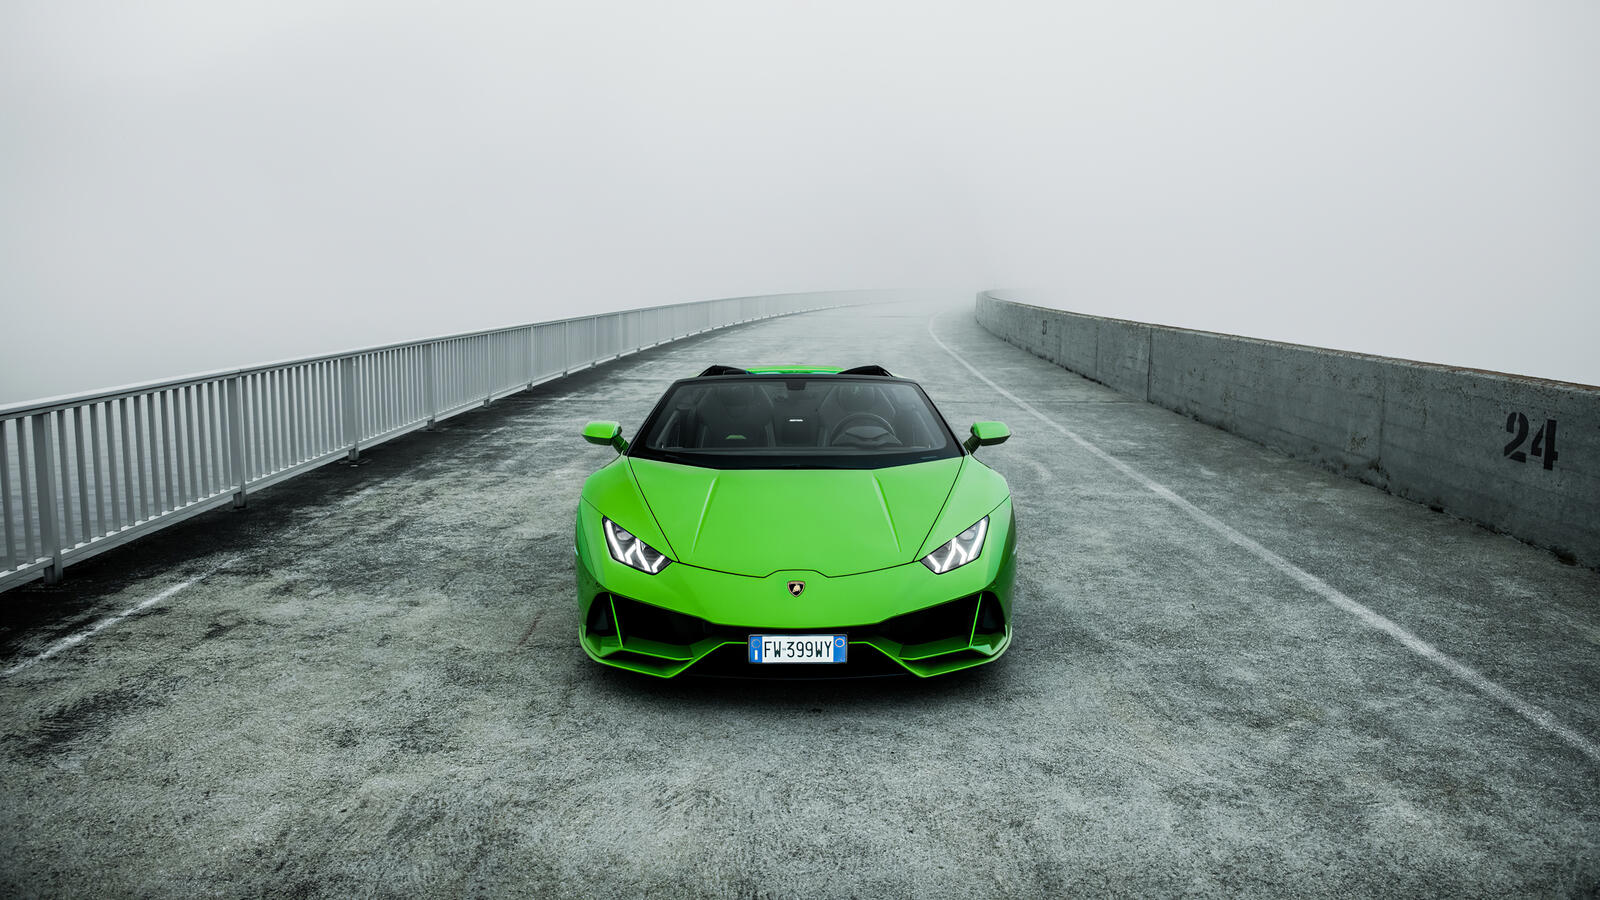 Wallpapers Lamborghini green cars 2020 year on the desktop